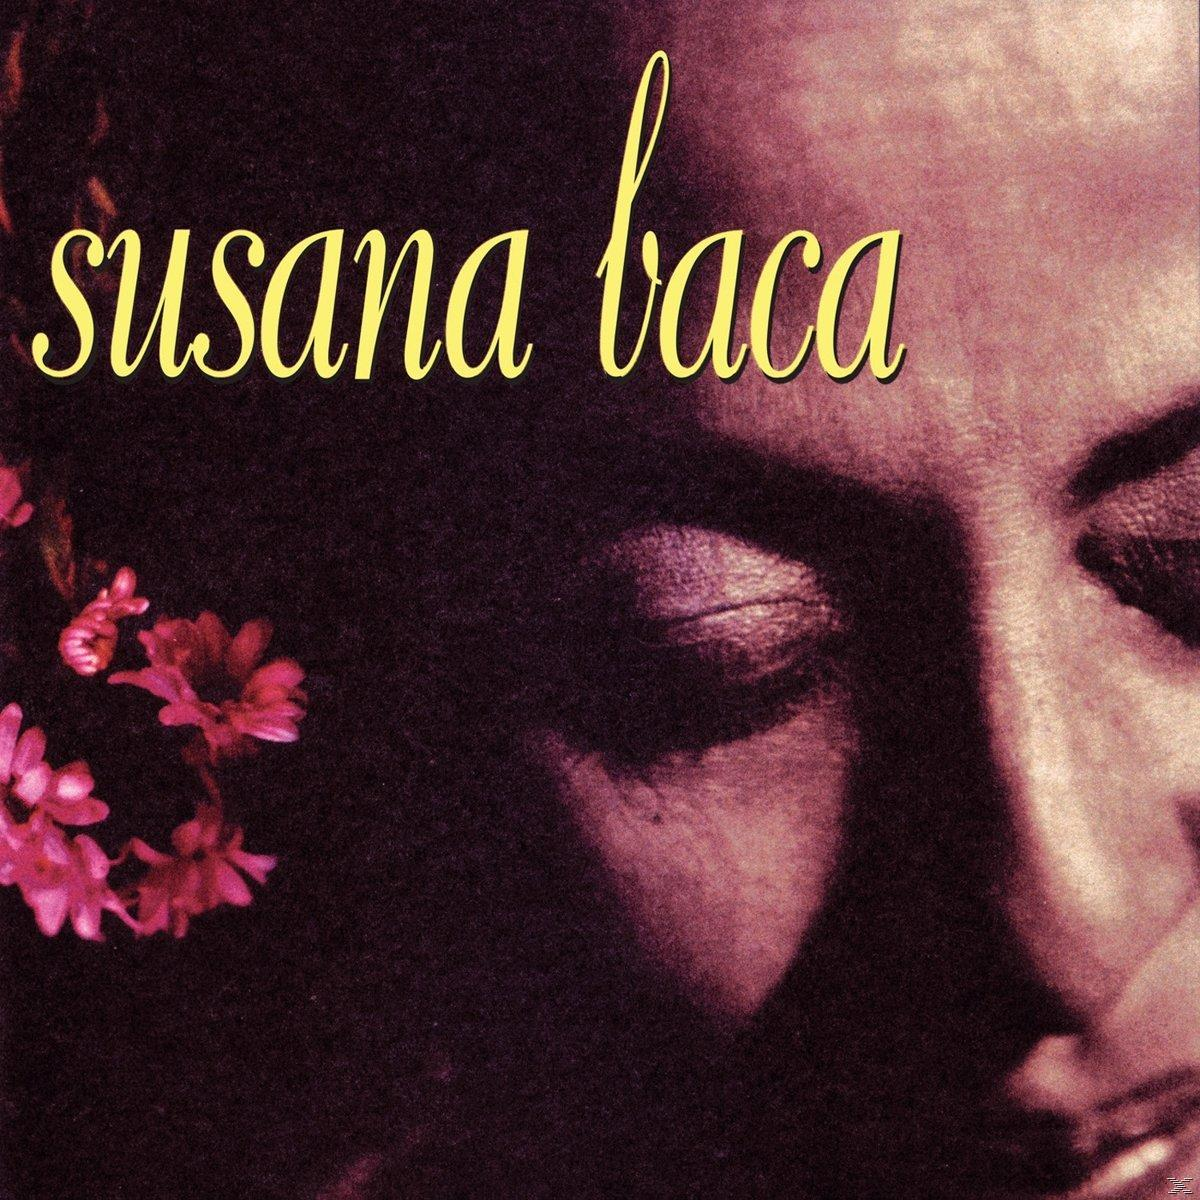 Susana - Baca Susana Baca - (Vinyl)